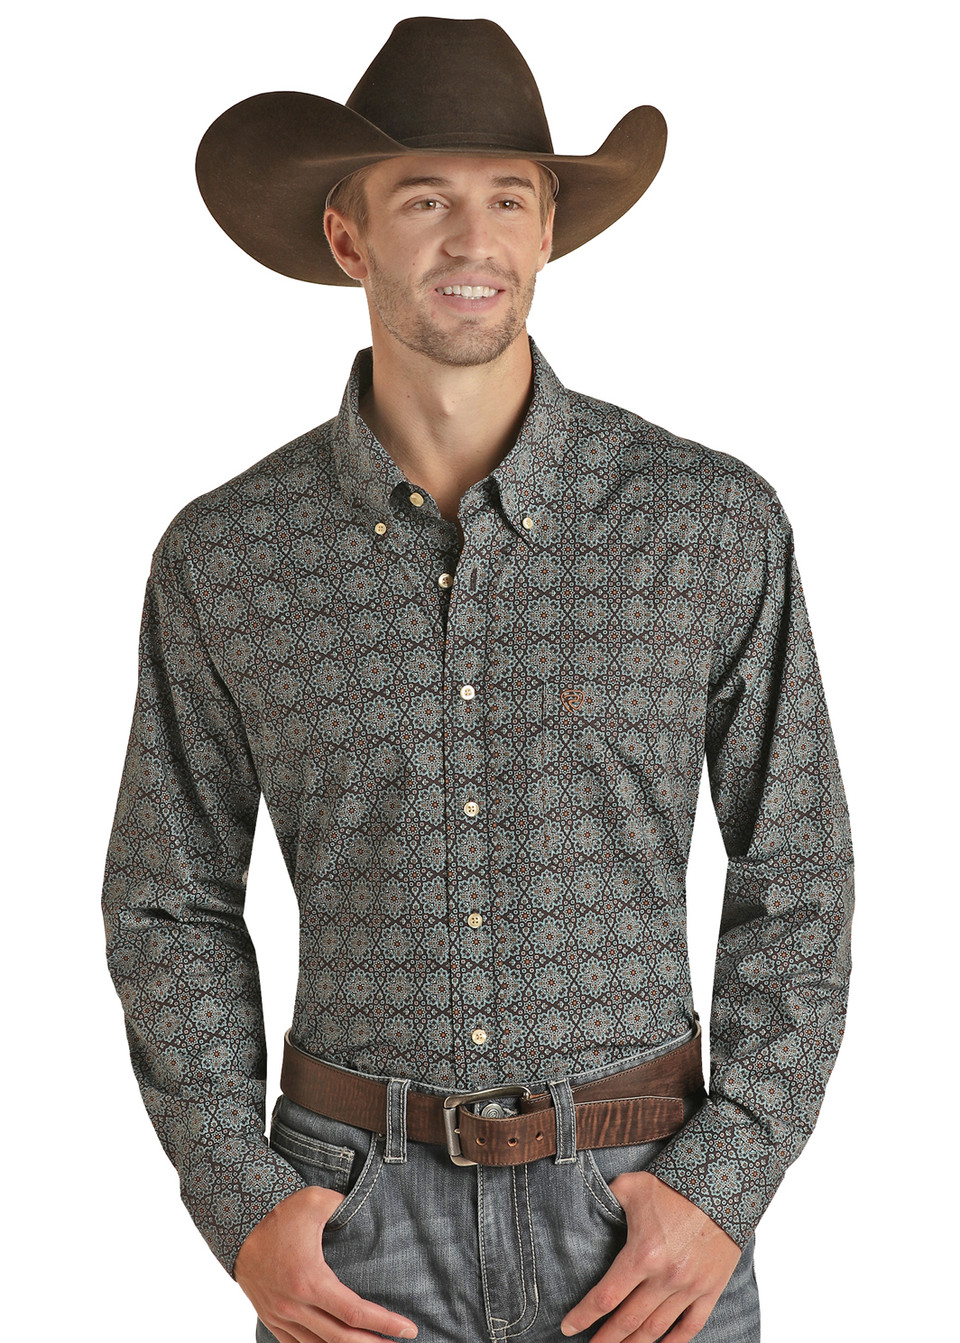 Men's Western Rodeo Shirts - Men's Rodeo Shirts Online